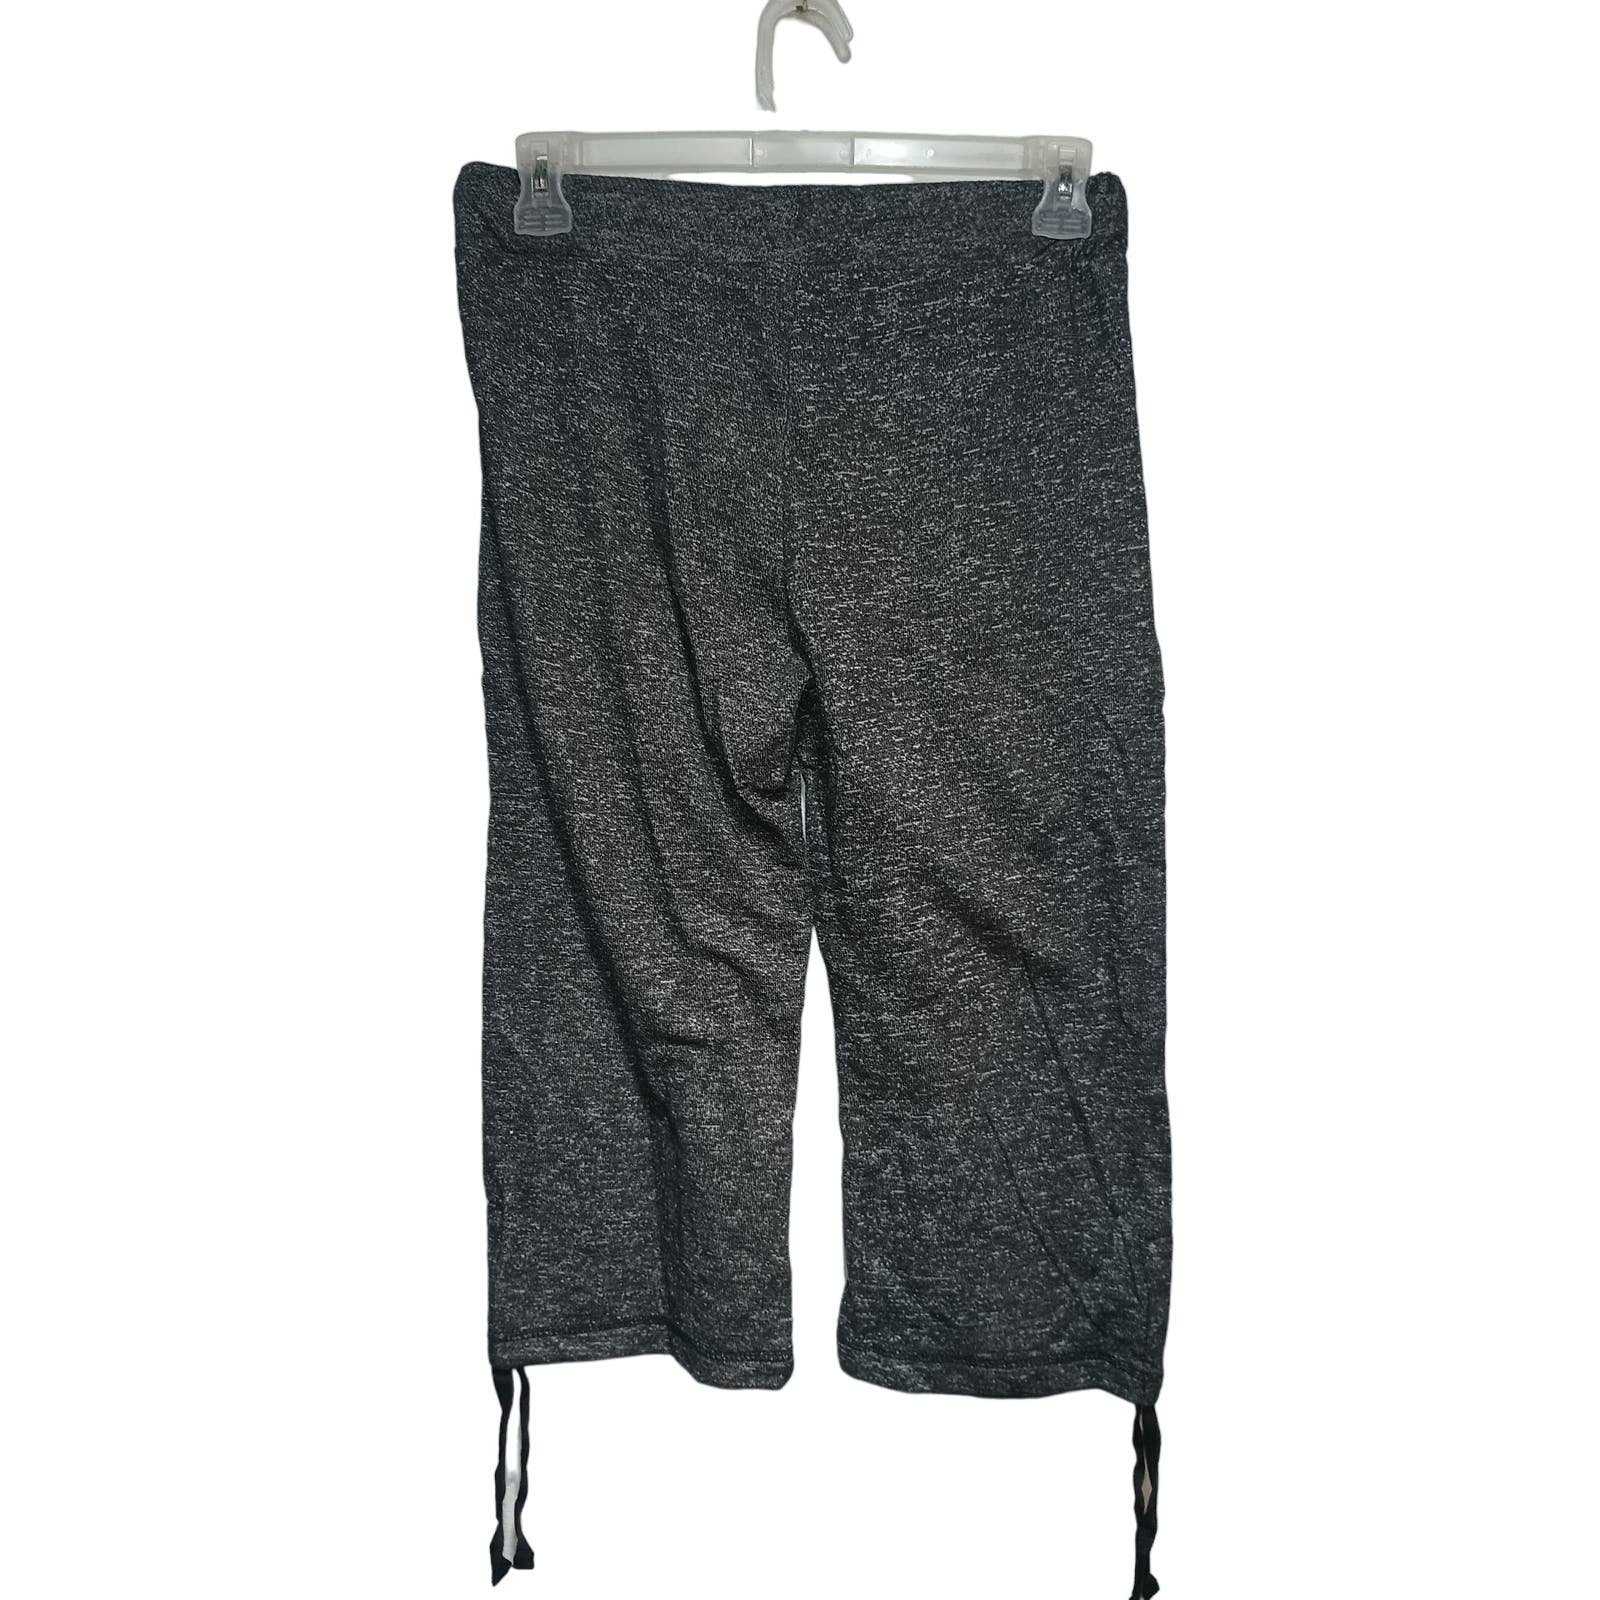 Authentic Bobbie Brooks Women´s Sweatpants Size Medium hKXinJDG6 Wholesale